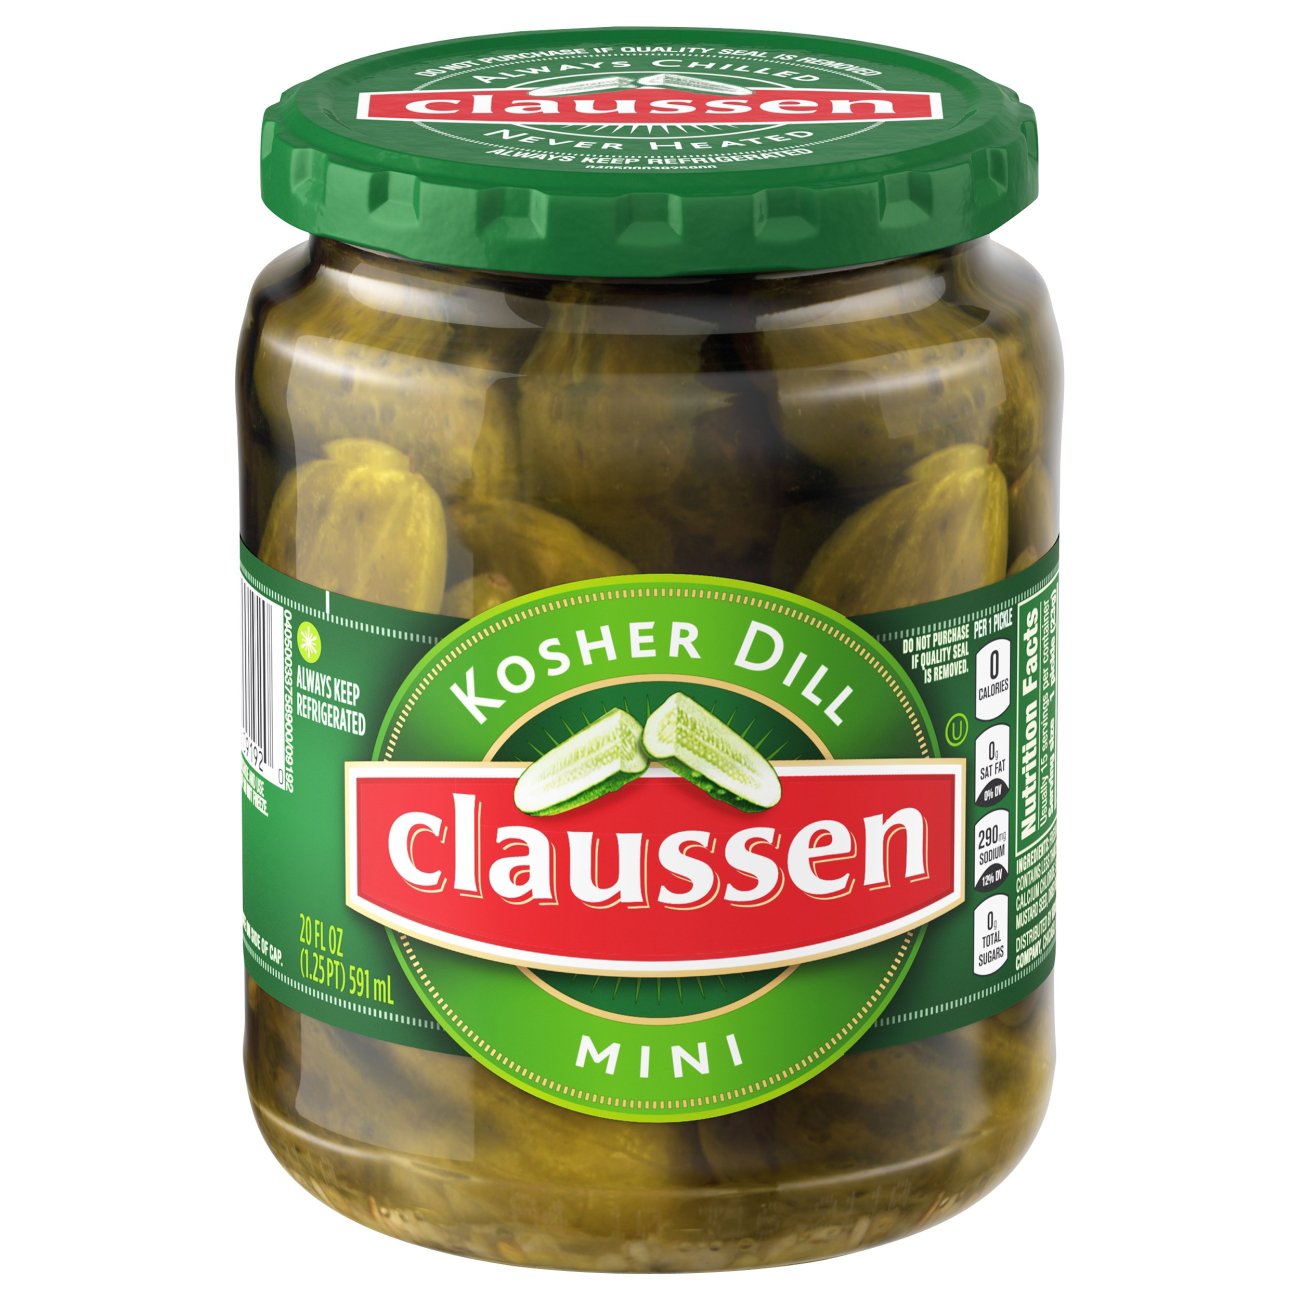 Claussen Mini Kosher Dill Pickles Shop Vegetables At H E B